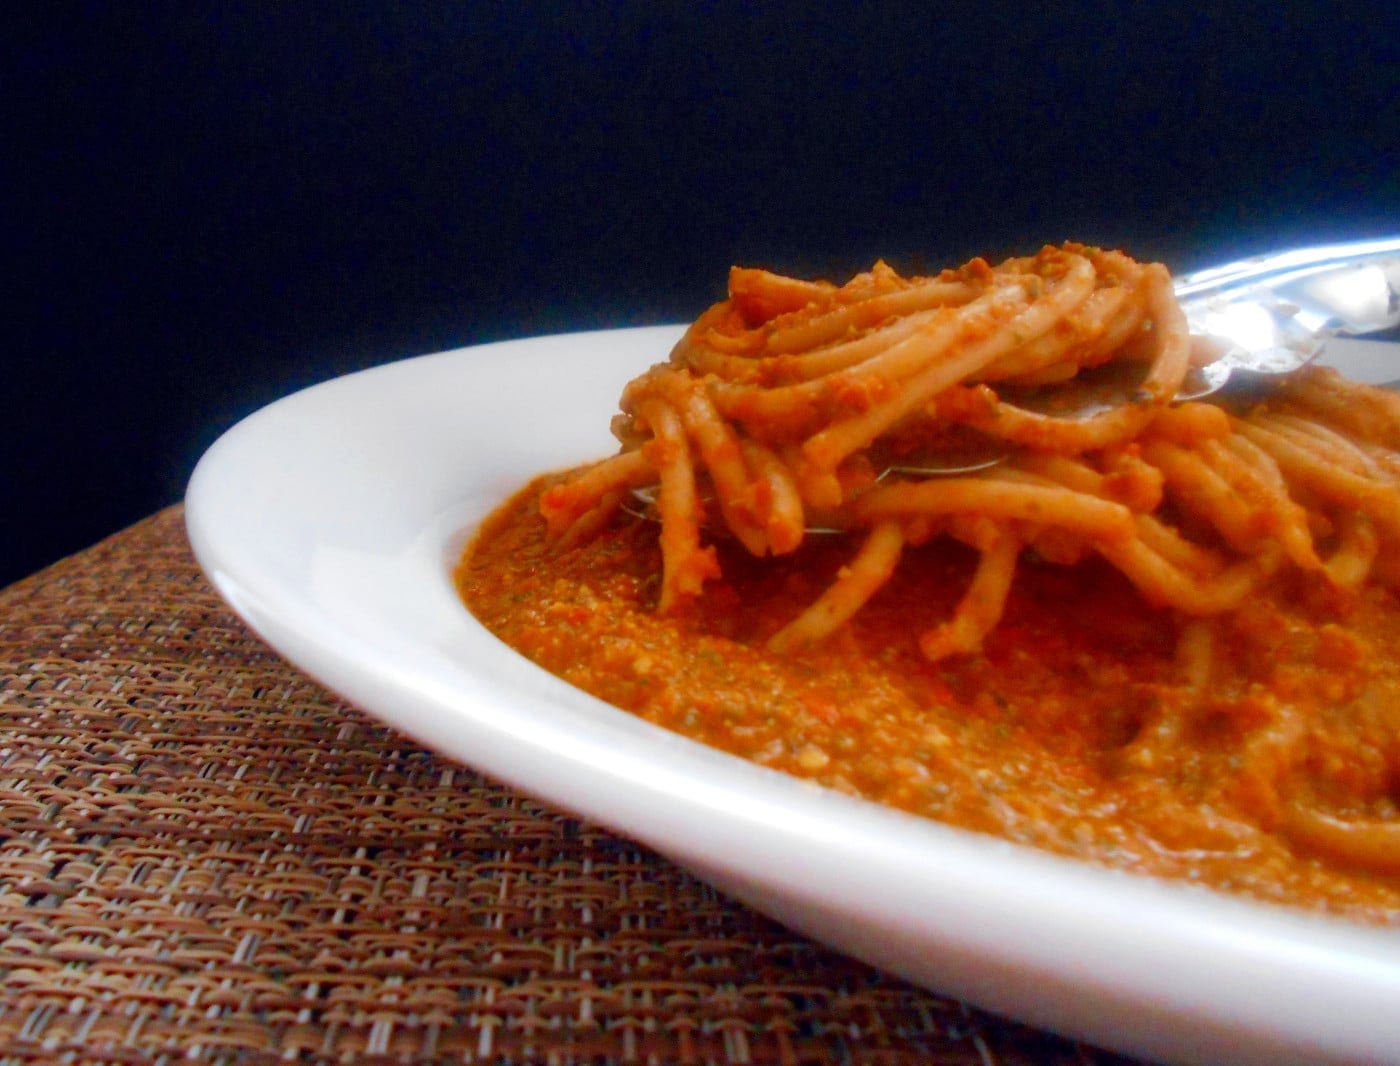 Closeup view of a tongs grabbing spaghetti with tomato pesto on a white dish